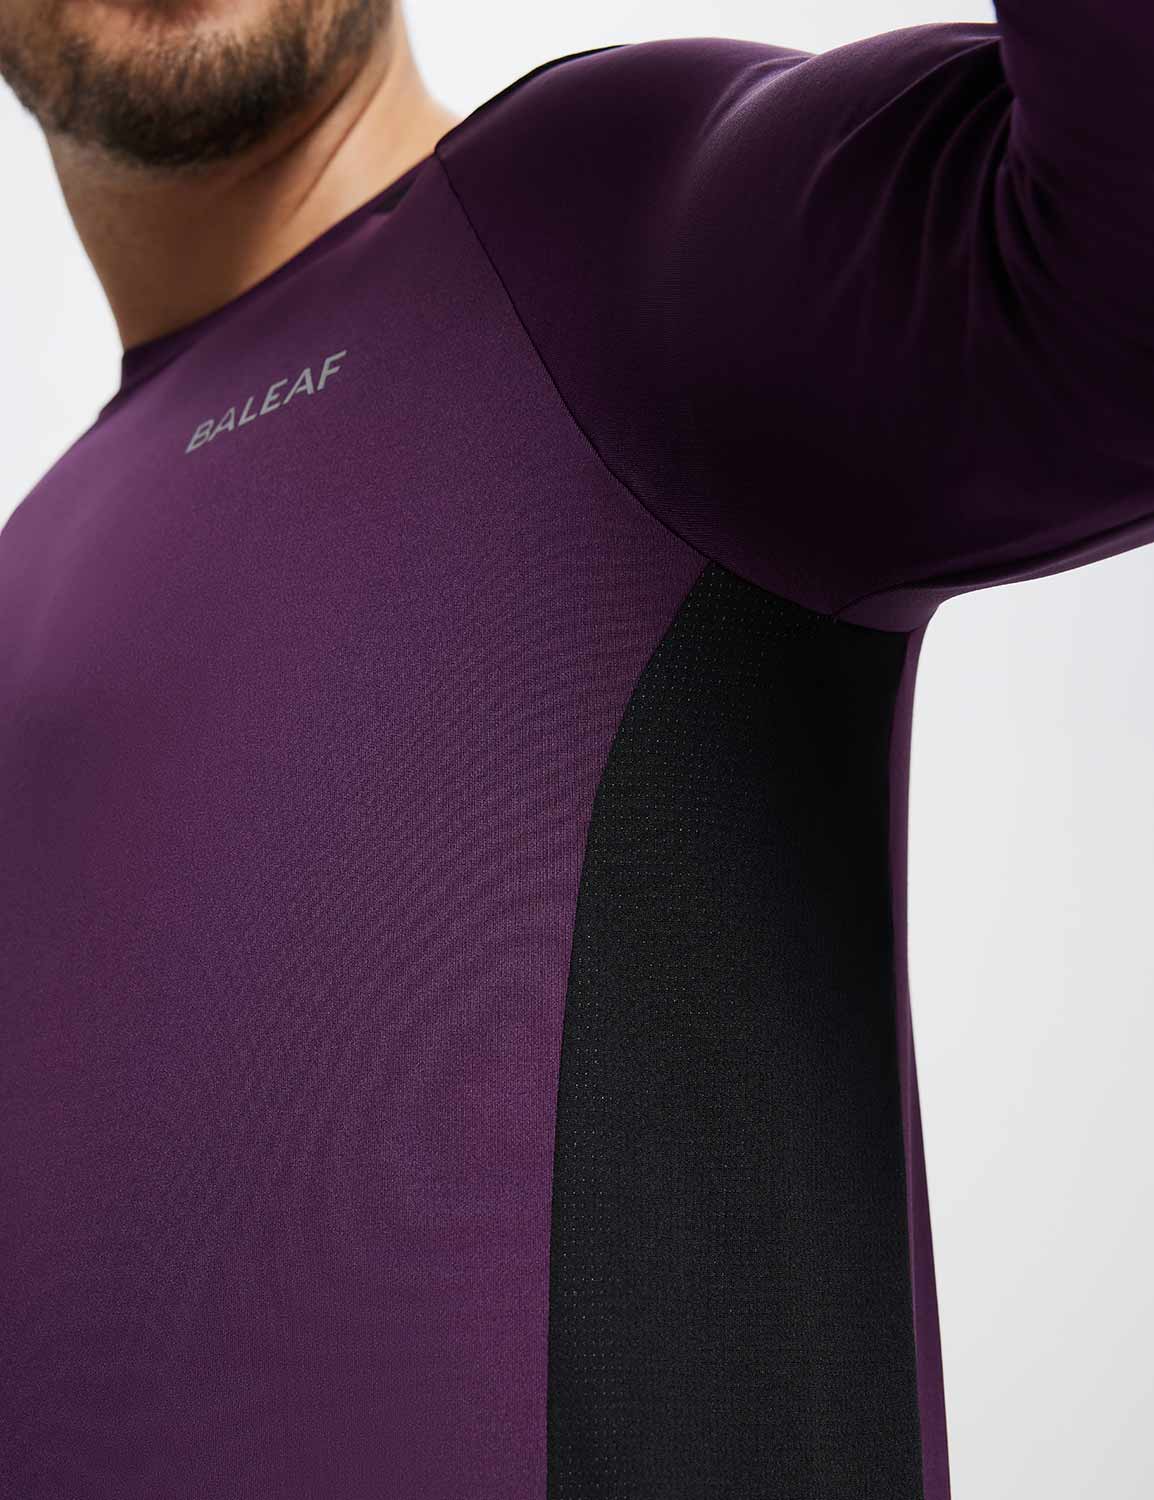 Baleaf Men's Sustainable Bodyfit Baselayer Shadow Purple Details